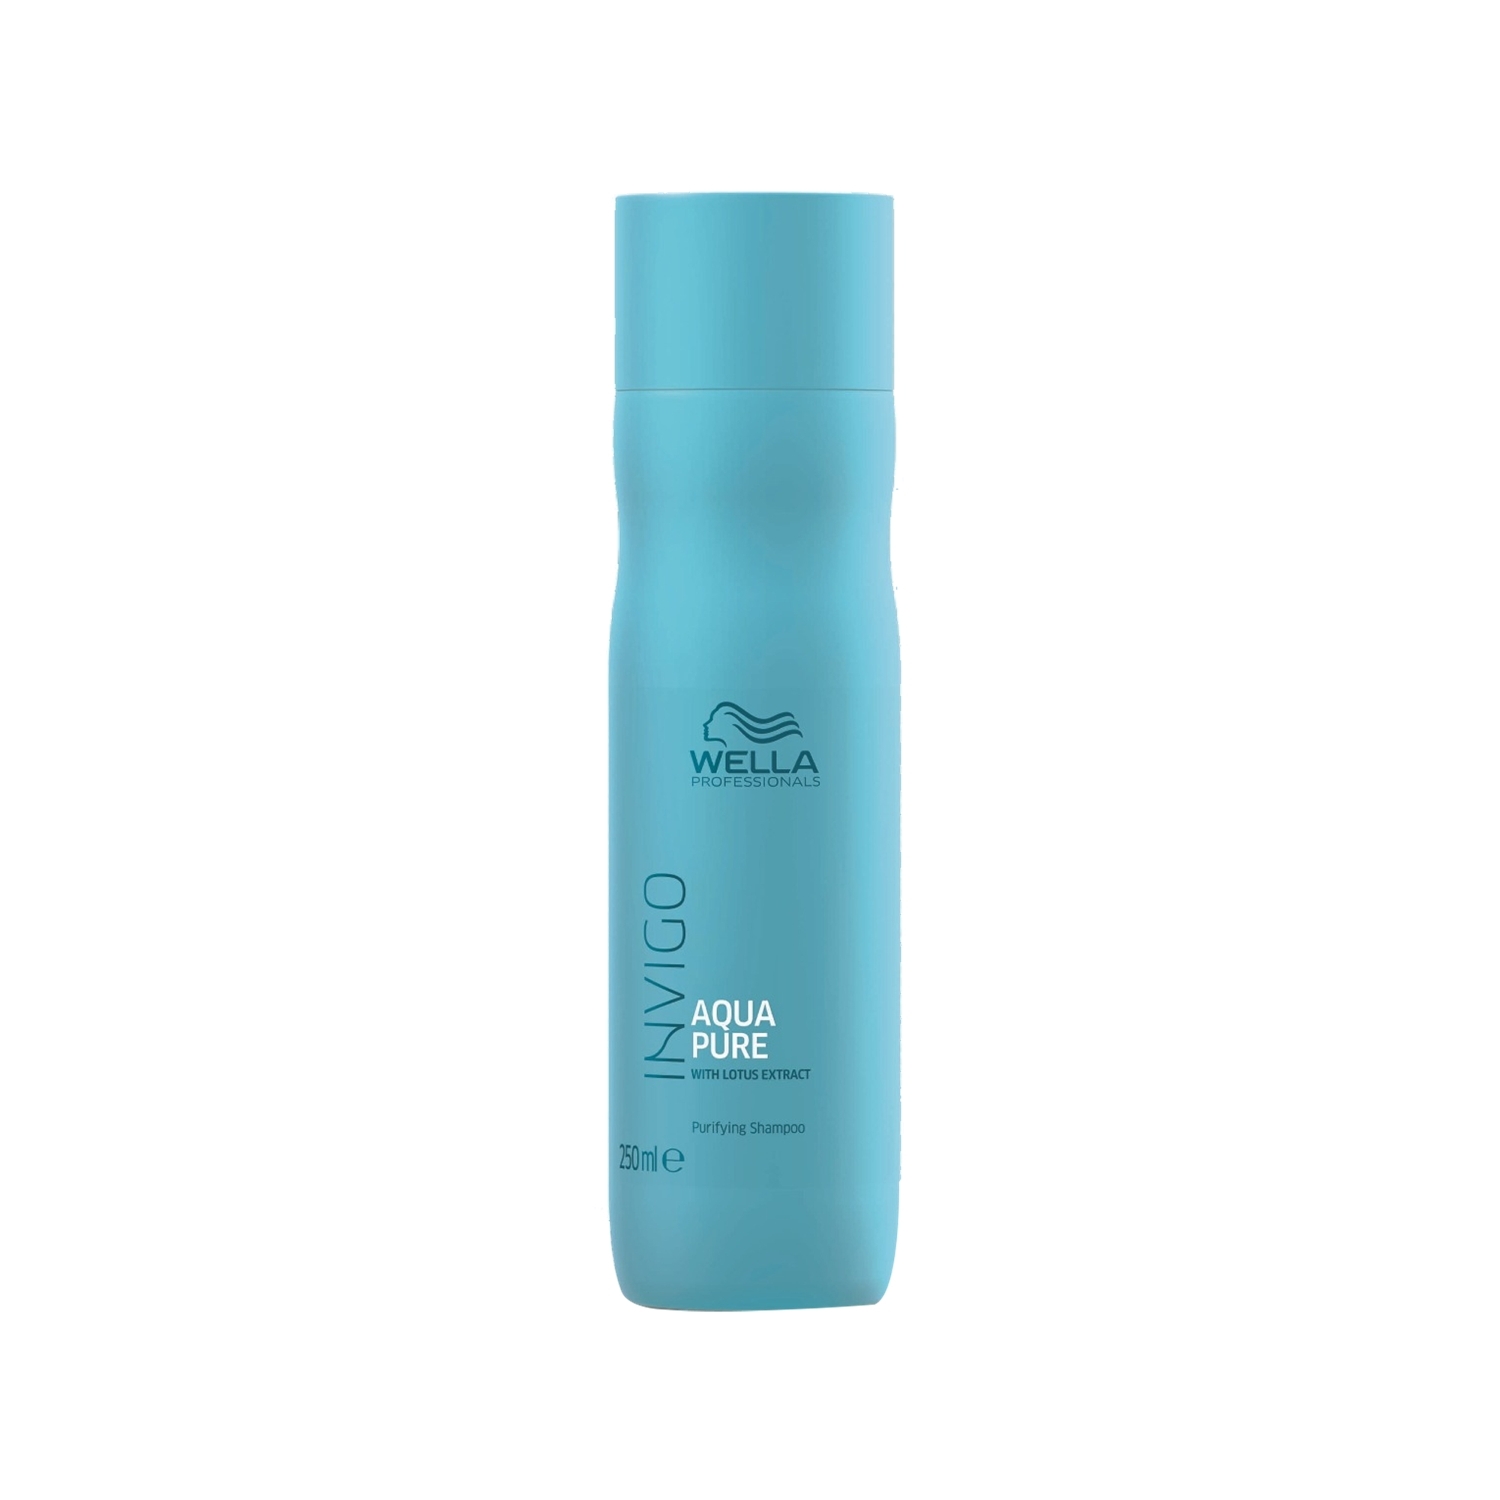 Wella Invigo Aqua Pure Arındırıcı Şampuan 250ml